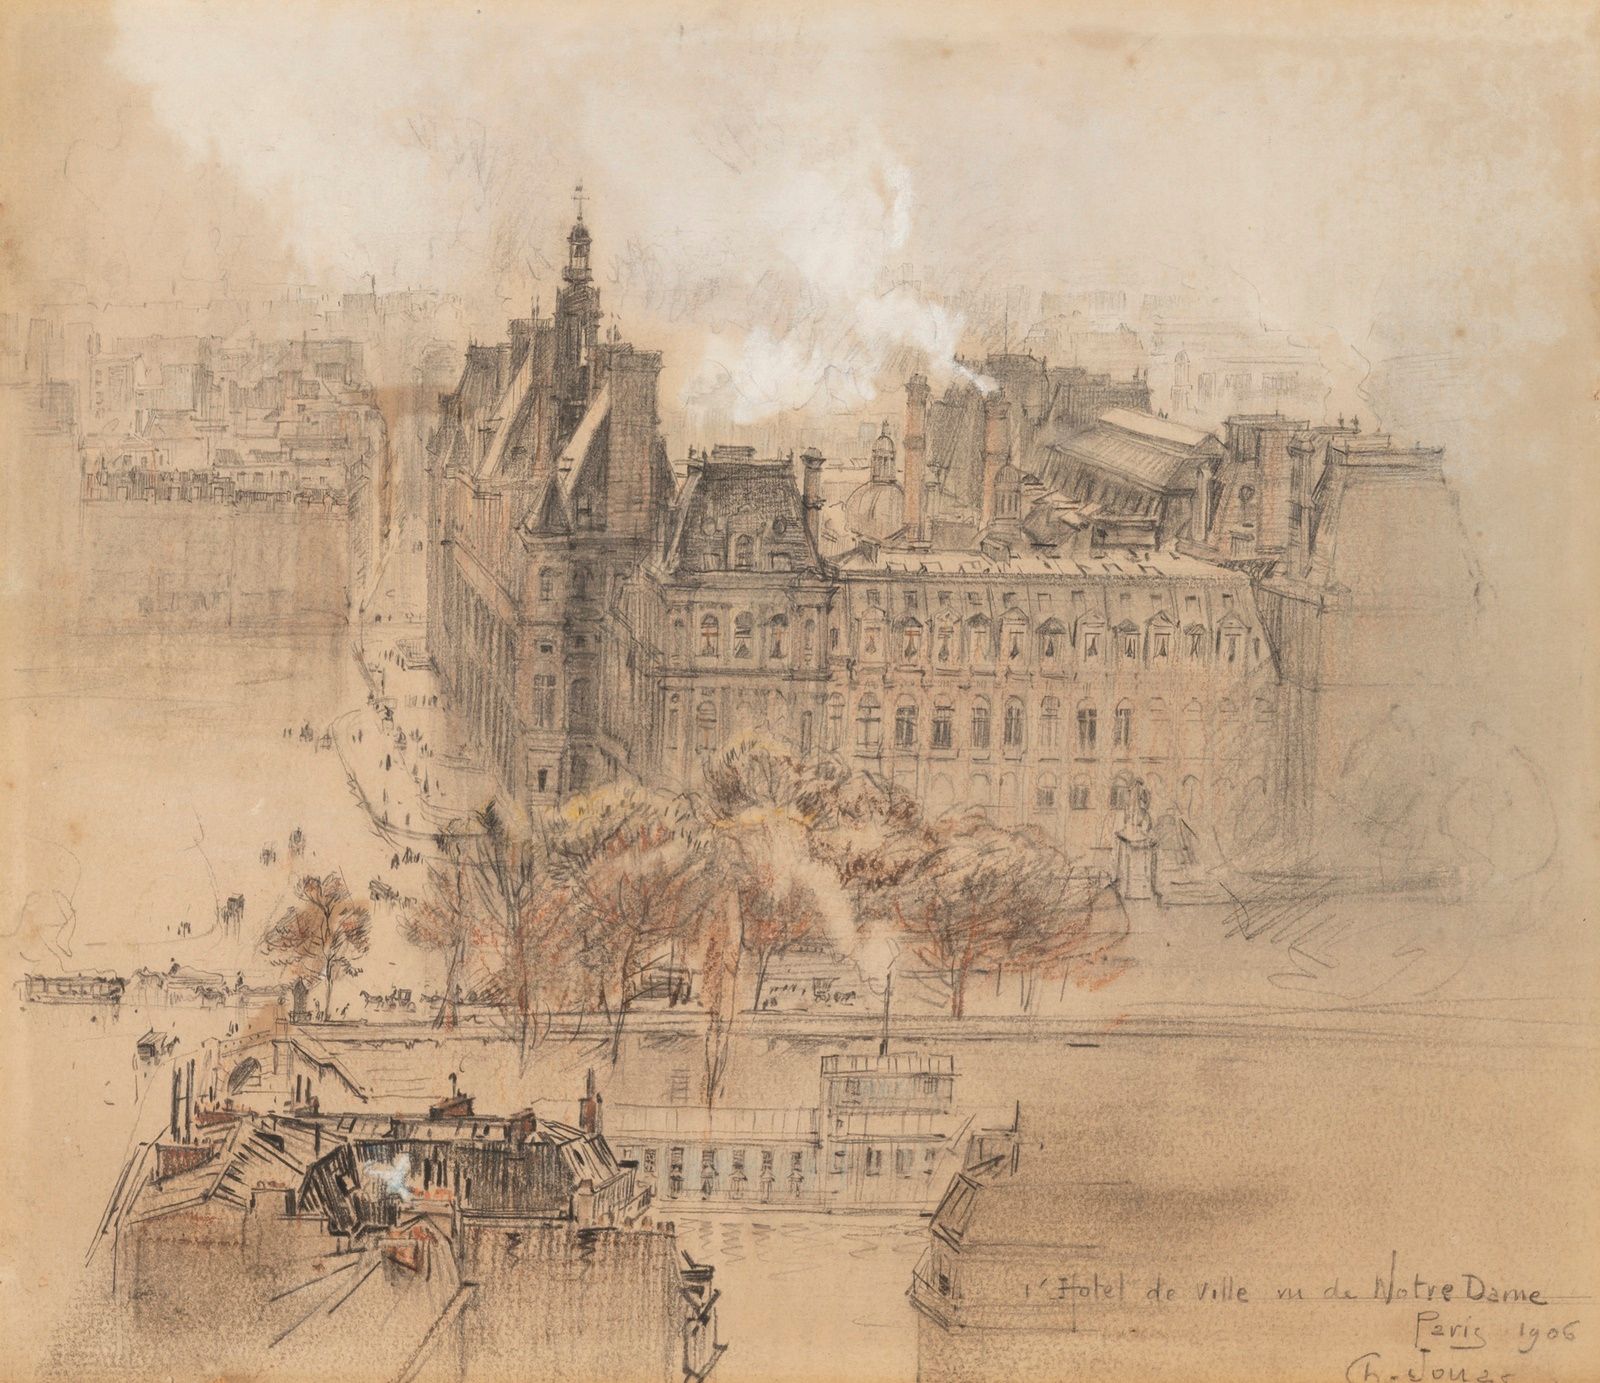 Null 查尔斯-茹阿斯(1866-1942)
从圣母院看到的市政厅
石墨、粉彩和水粉画
23 x 27 cm